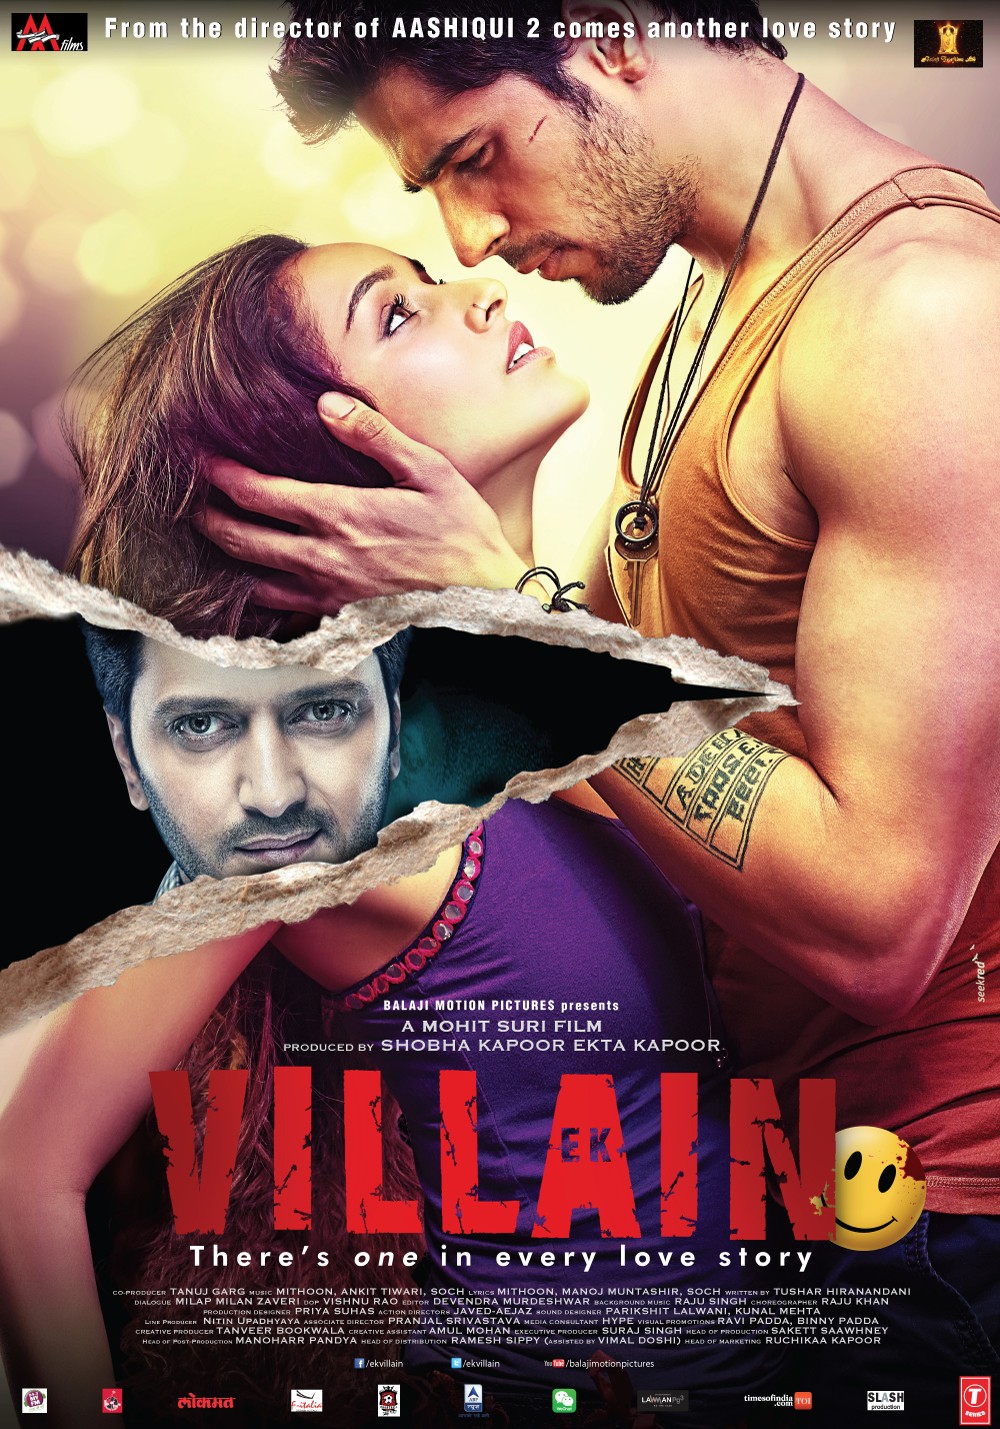 Extra Large Movie Poster Image for Ek Villain (#3 of 4)